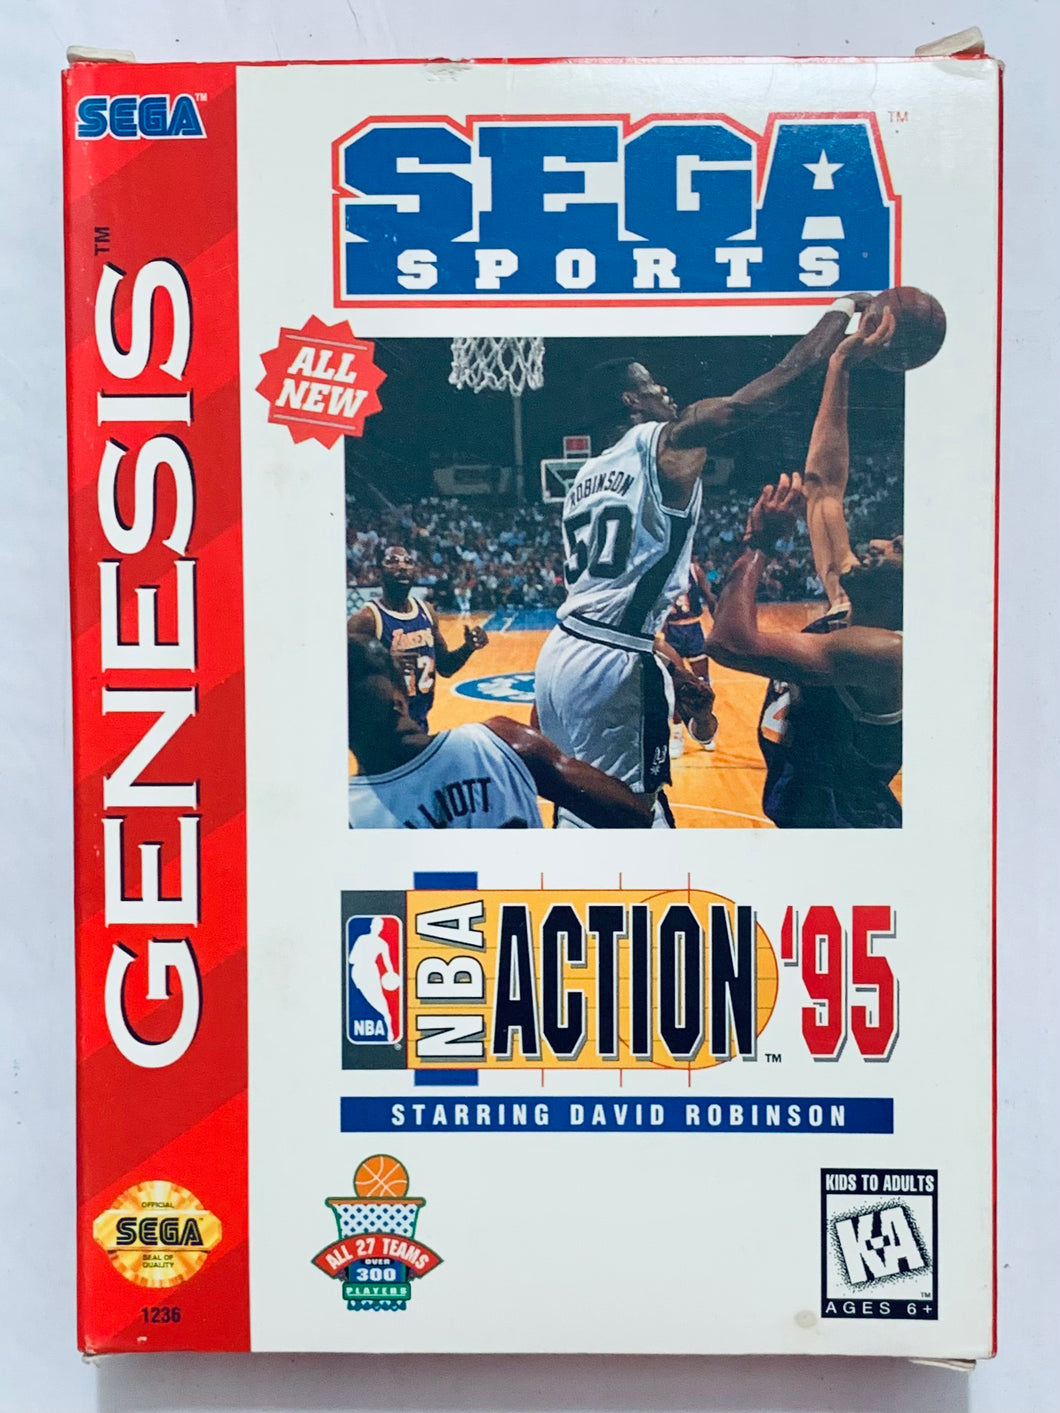 NBA Action '95 starring David Robinson - Sega Genesis - NTSC - CIB (1236)